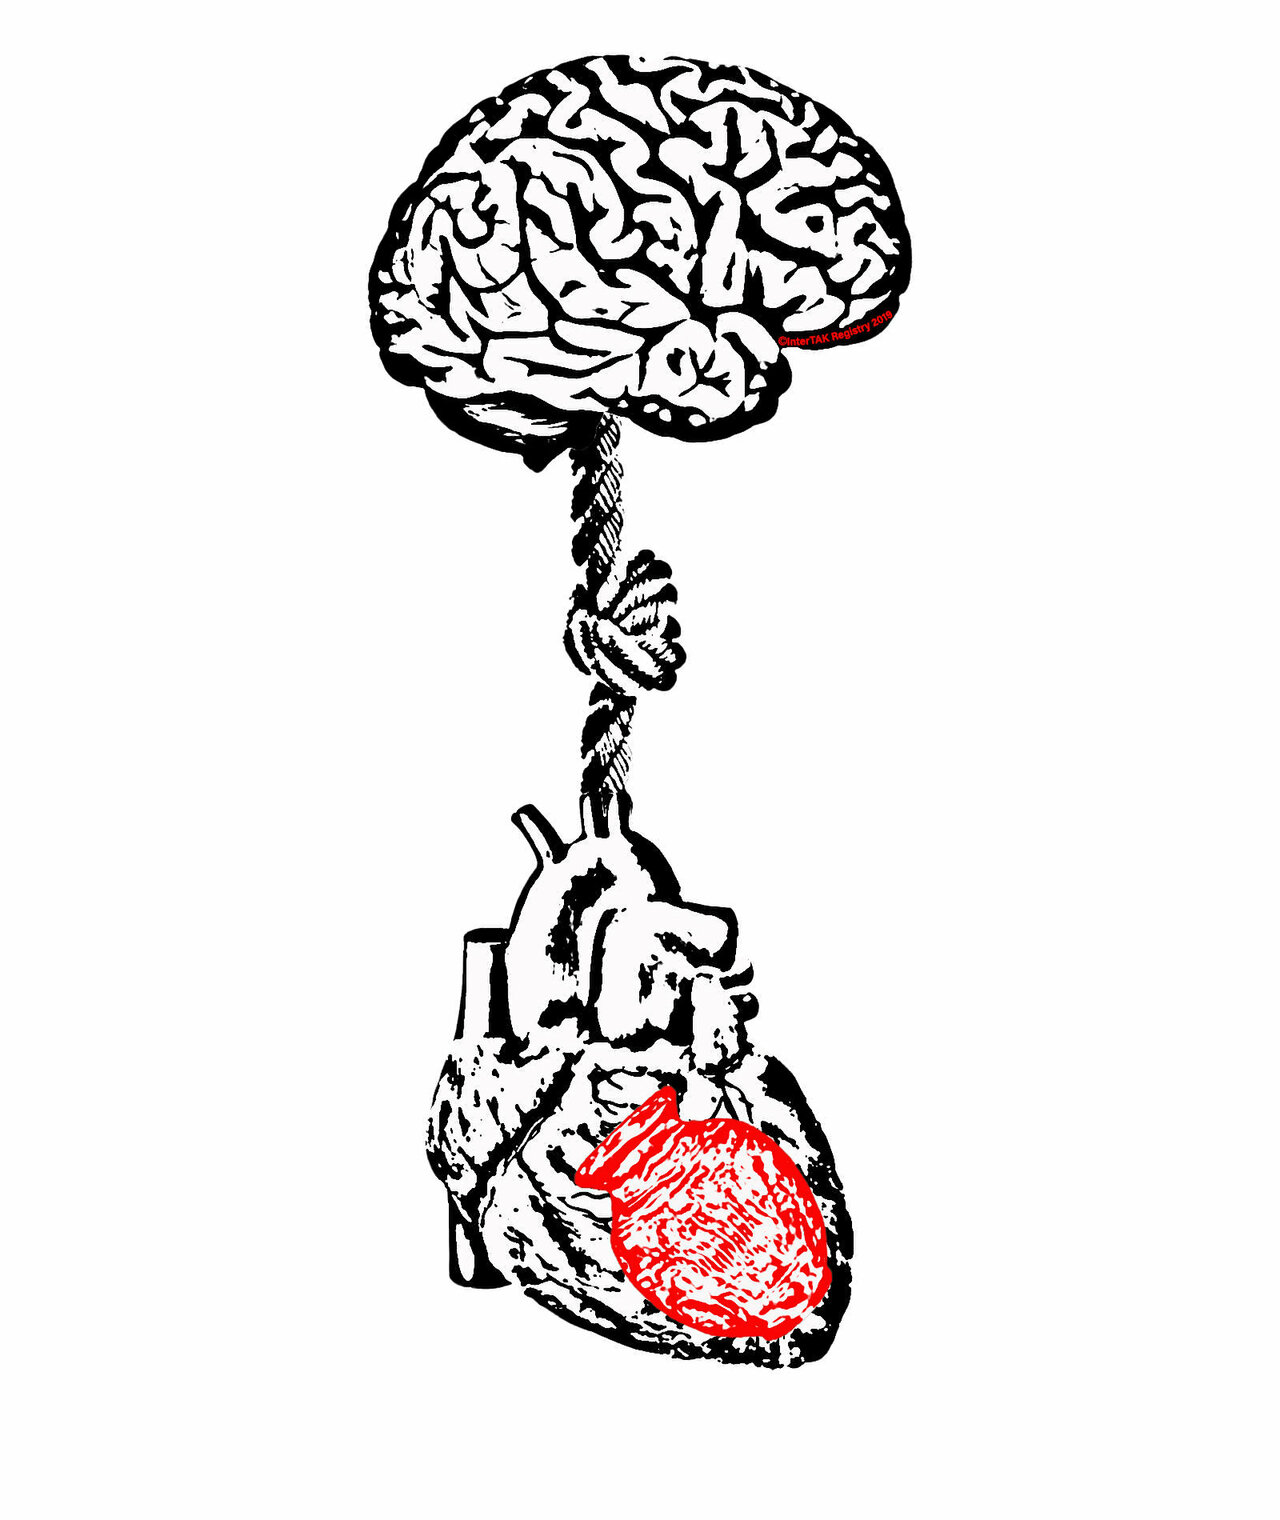 Heart and brain. Мозг и сердце. Сердце и головной мозг. Сердце и мозг человека. Мозг и сердце эскиз.